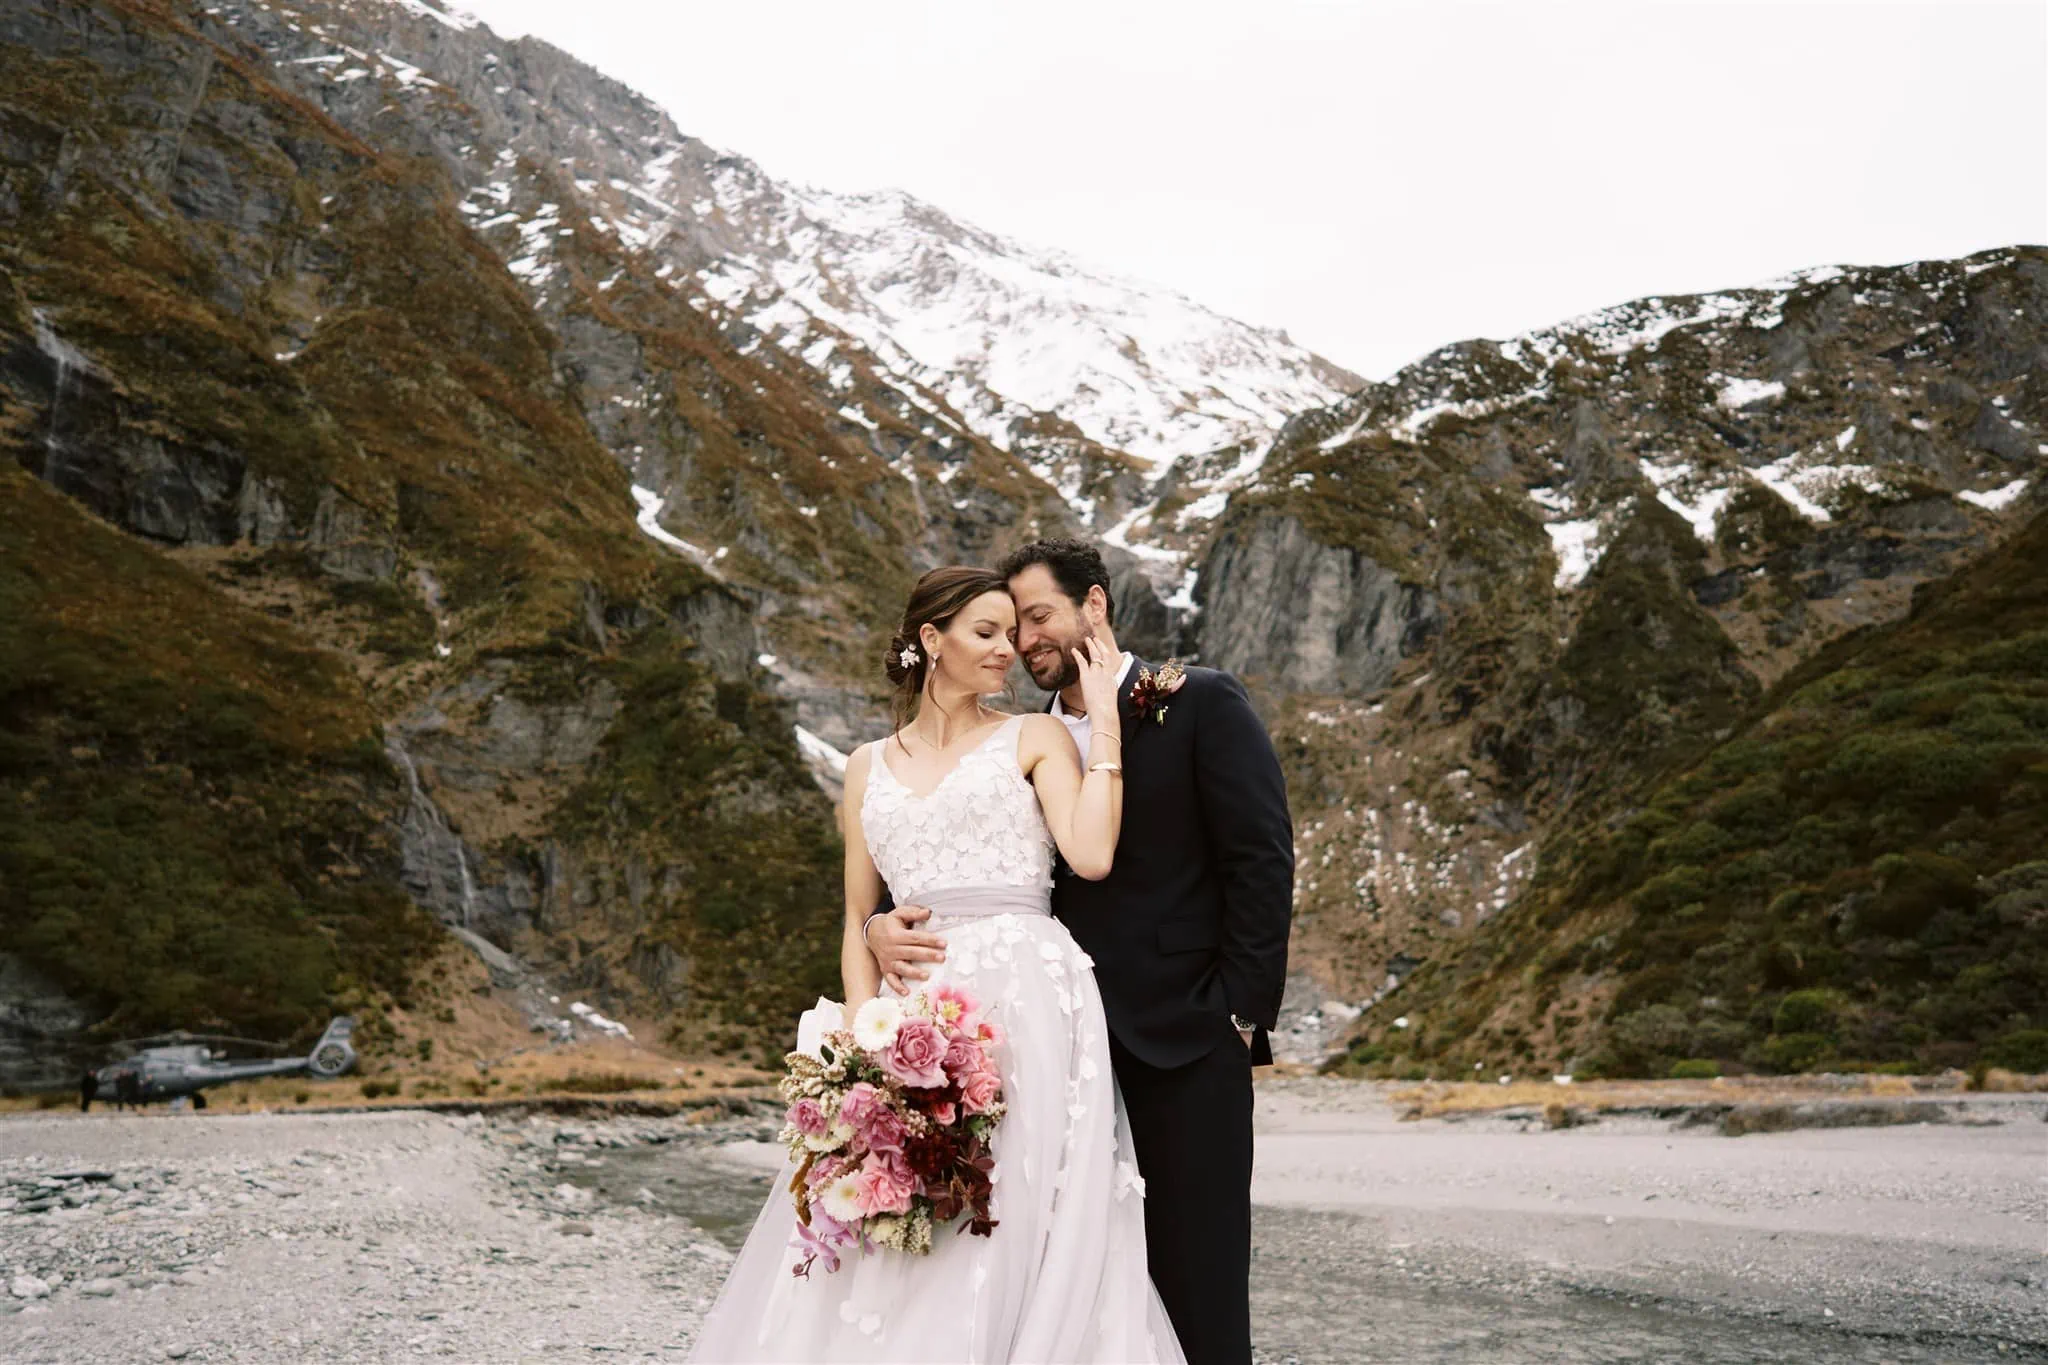 Queenstown New Zealand Elopement Wedding Photographer - A bride and groom elopement in Queenstown, New Zealand, standing in front of a river while stargazing.